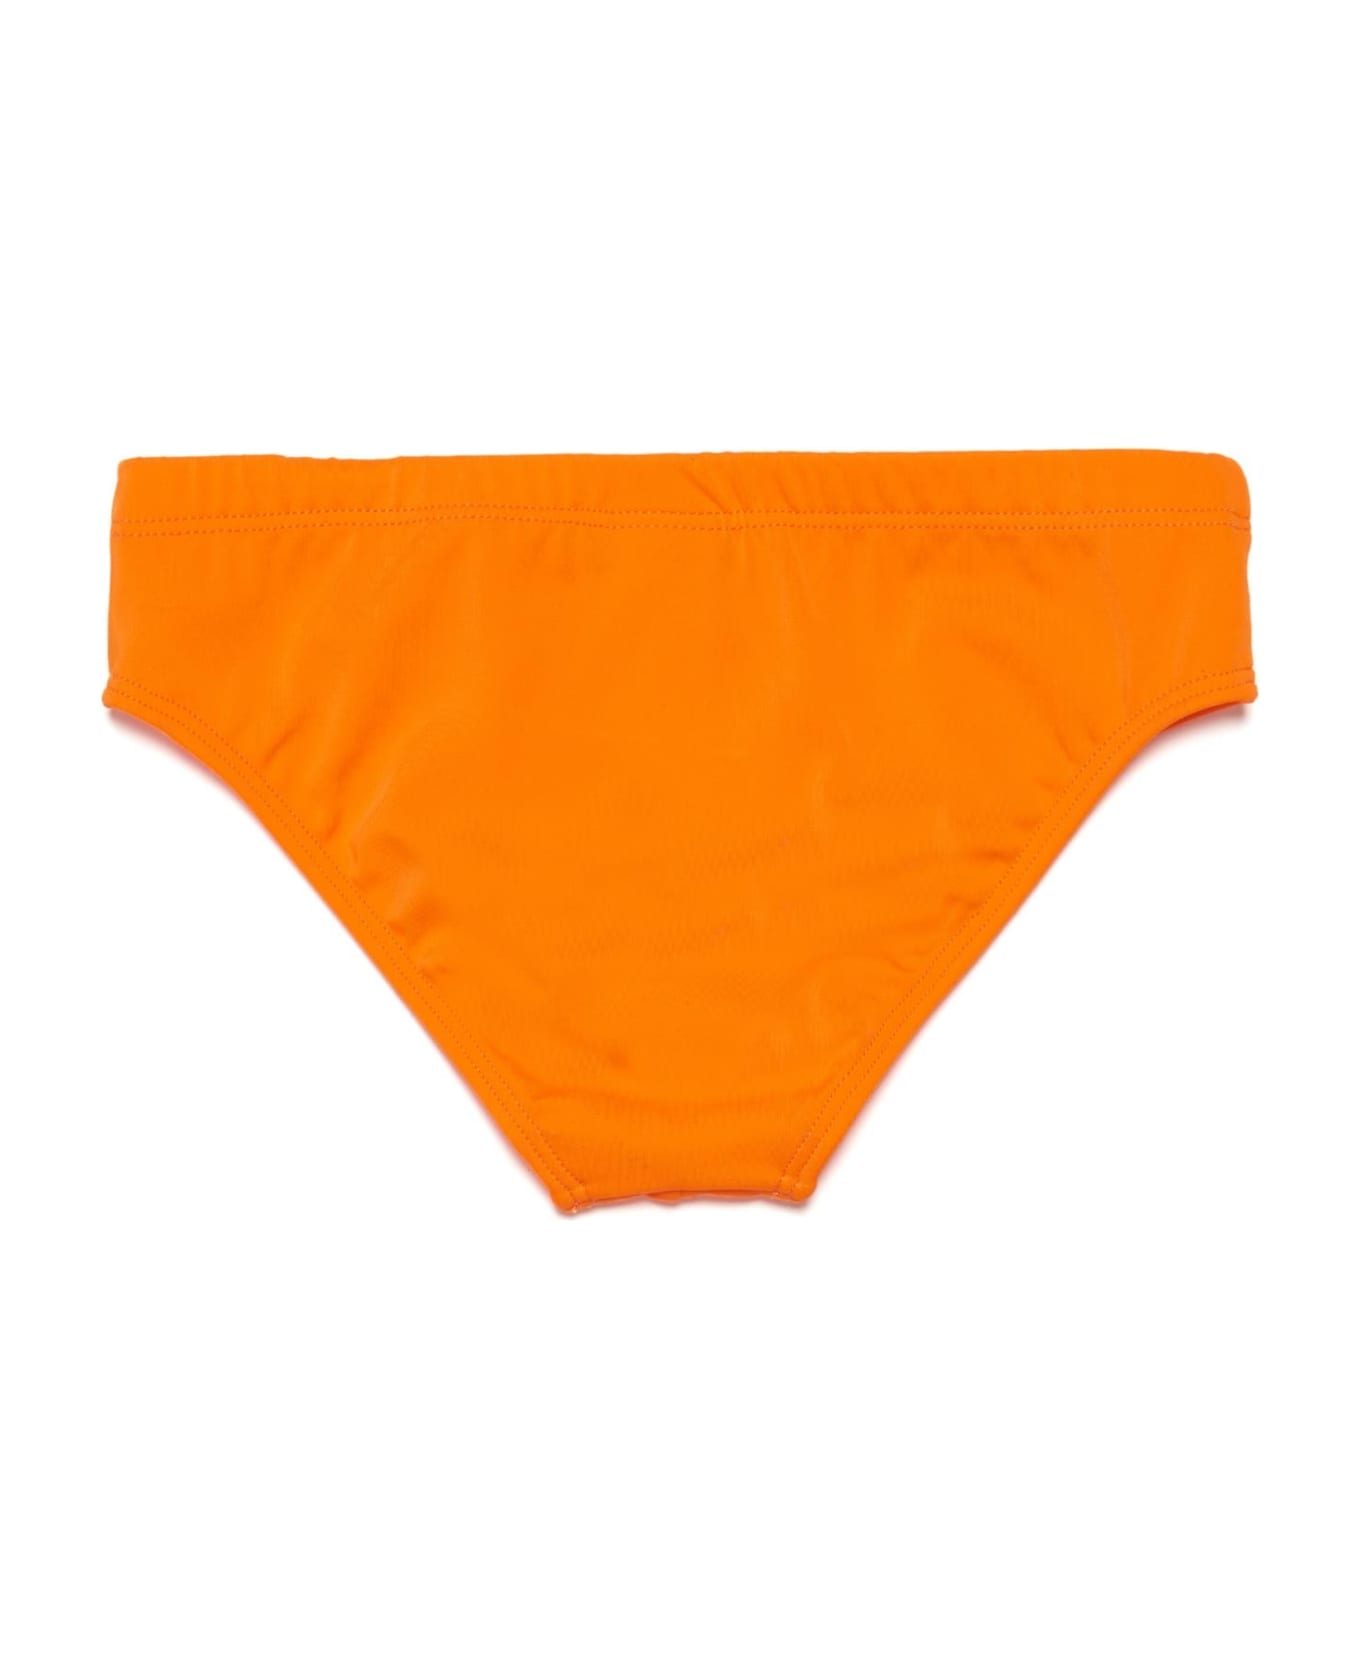 N.21 Swimsuit With Print - Orange